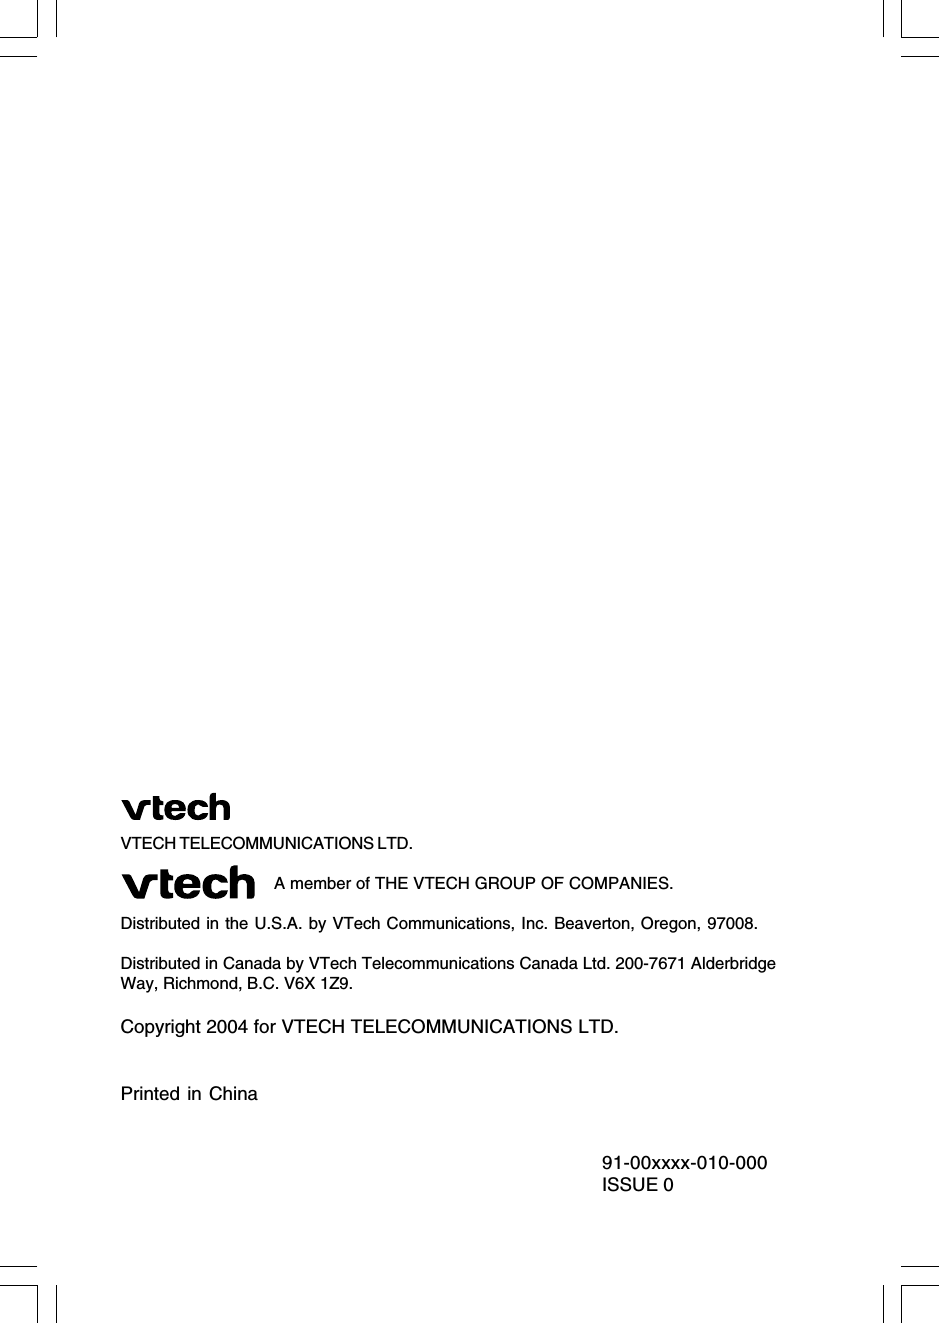 VTECH TELECOMMUNICATIONS LTD.                               A member of THE VTECH GROUP OF COMPANIES.Distributed in the U.S.A. by VTech Communications, Inc. Beaverton, Oregon, 97008.Distributed in Canada by VTech Telecommunications Canada Ltd. 200-7671 AlderbridgeWay, Richmond, B.C. V6X 1Z9.Copyright 2004 for VTECH TELECOMMUNICATIONS LTD.Printed in China91-00xxxx-010-000ISSUE 0